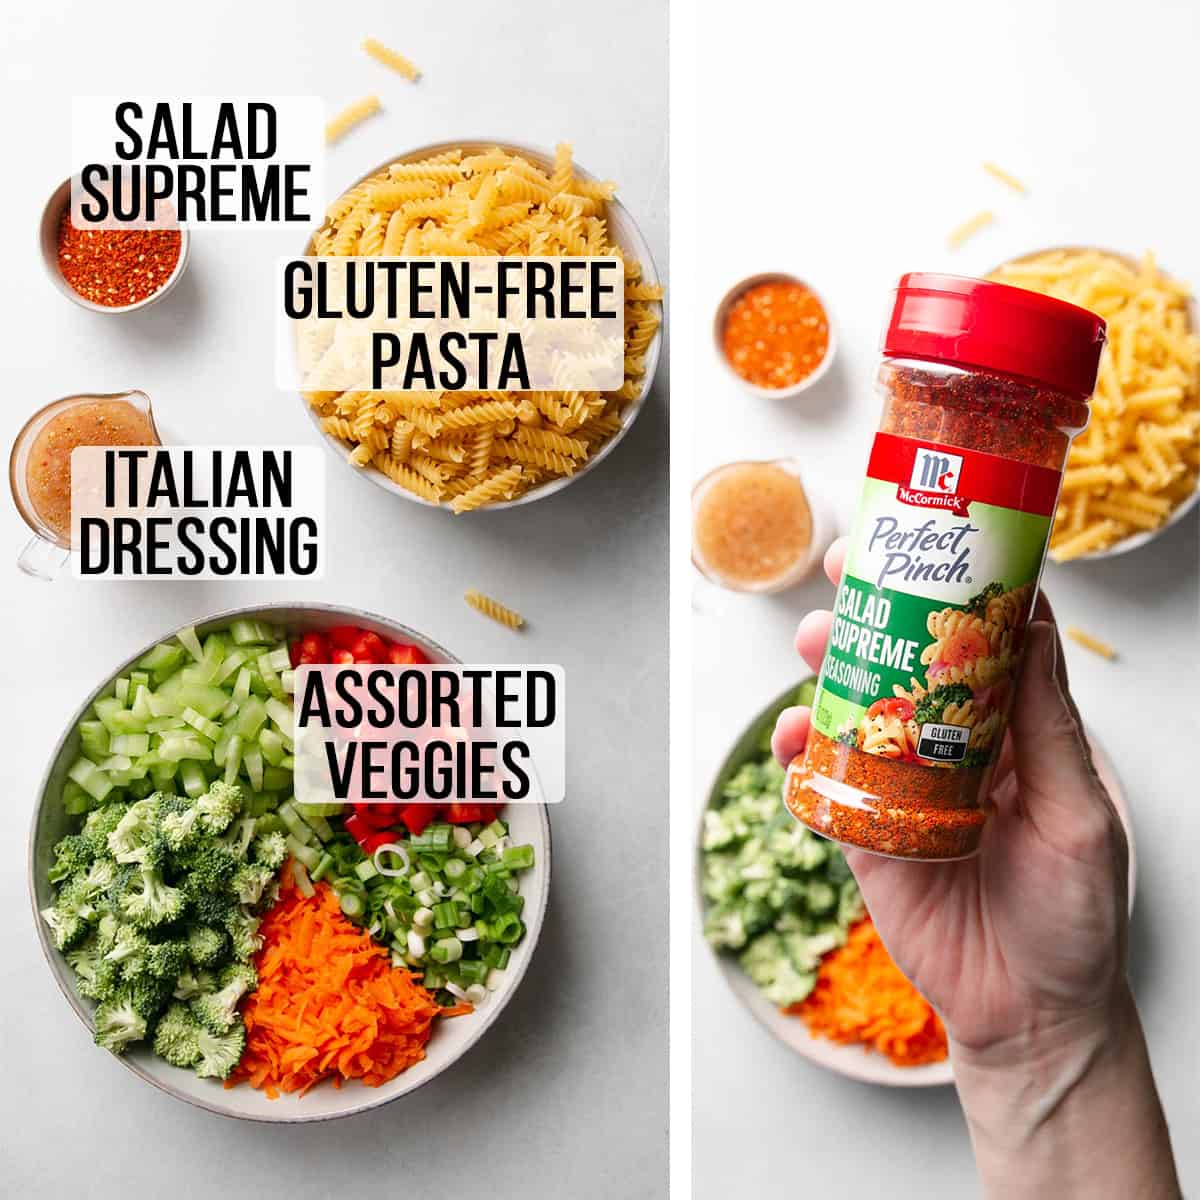 Ingredients for pasta salad measured out in bowls, hand holding bottle of salad supreme seasoning.